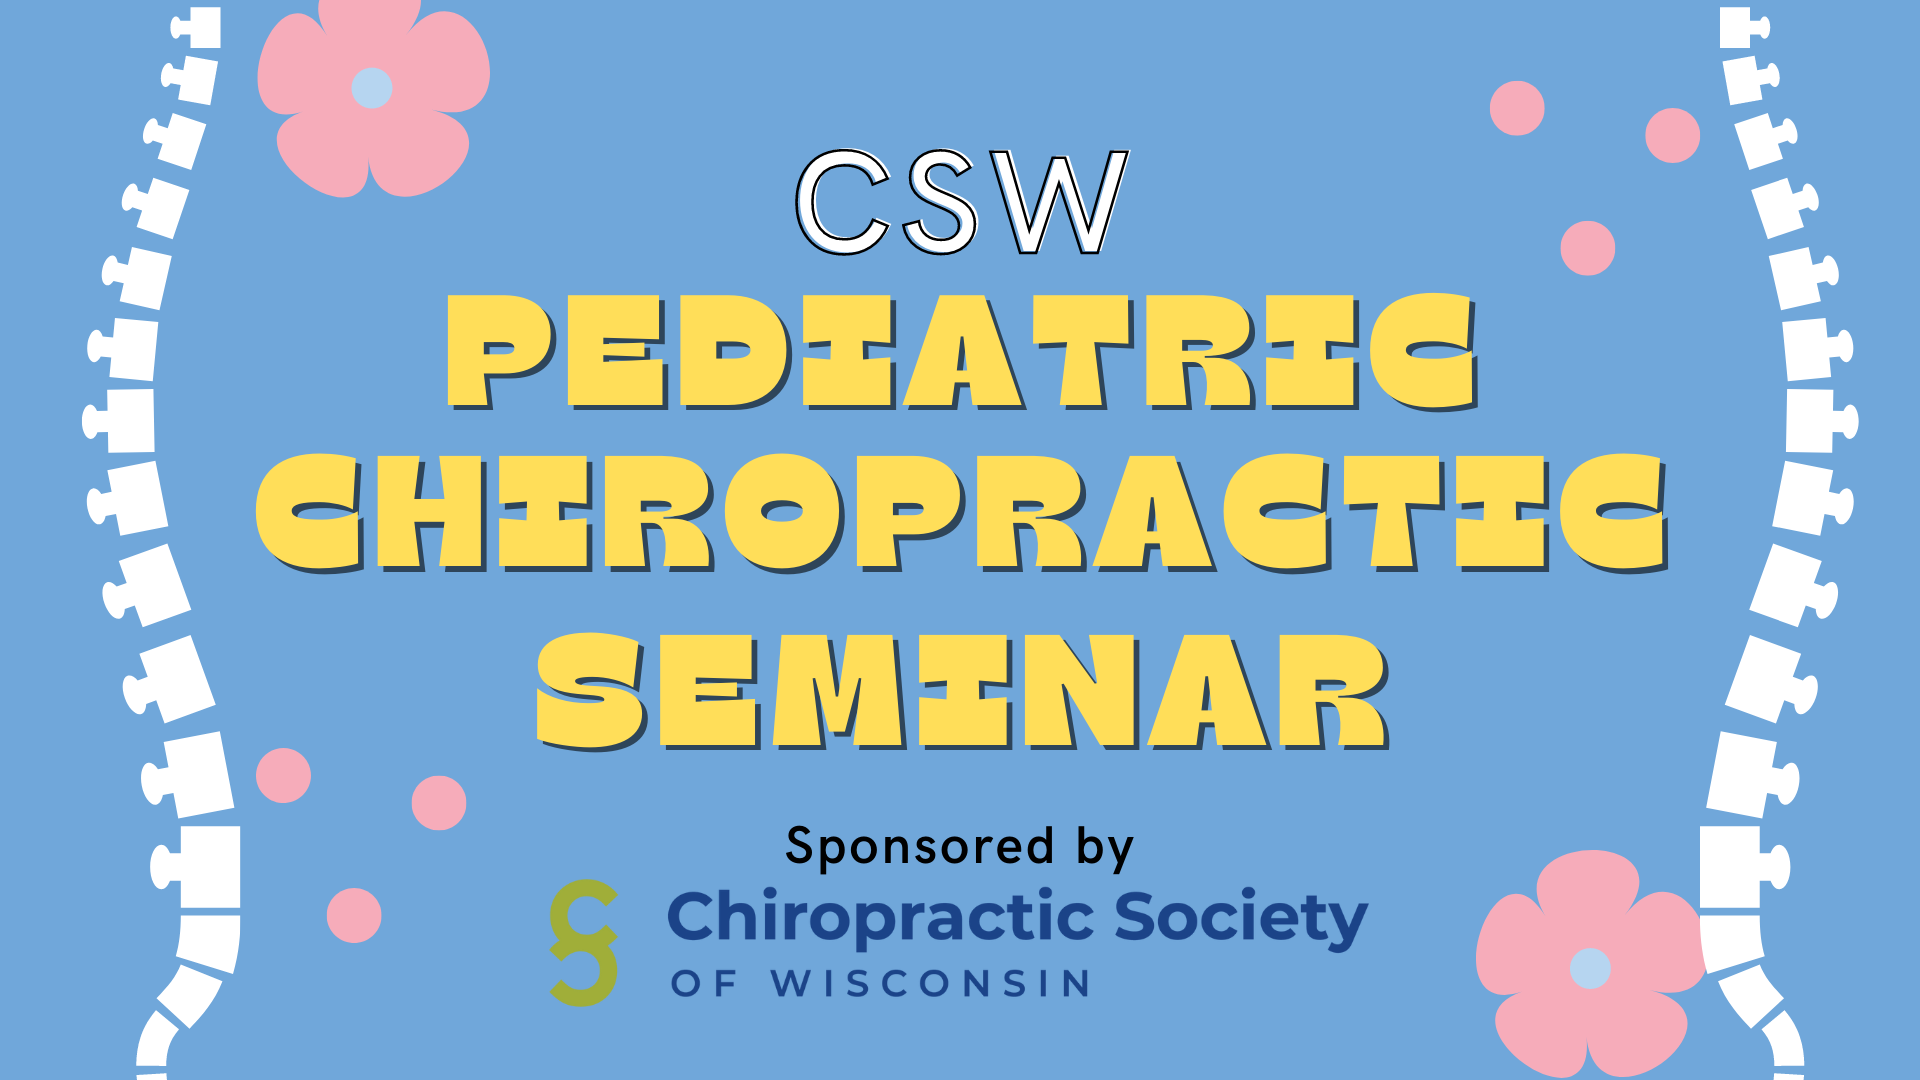 CSW Pediatric Seminar